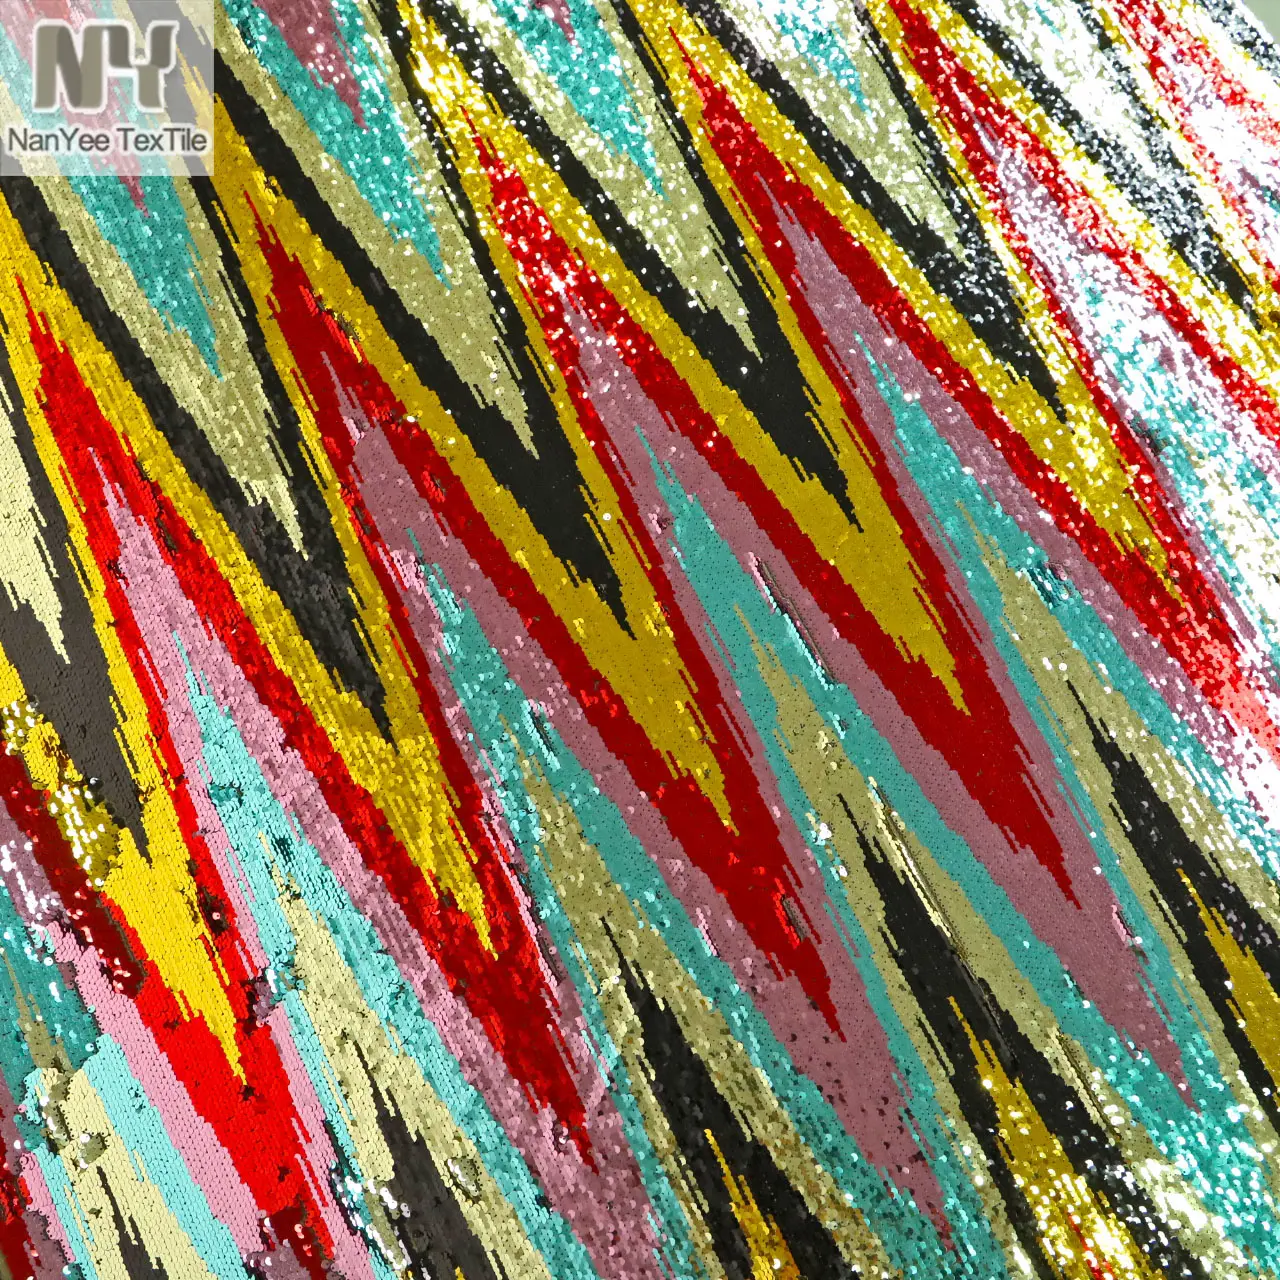 Nanyee Textile Shaoxing NEU Rainbow Wave Cluster Schwarz Rot Pailletten Zickzack Stoff